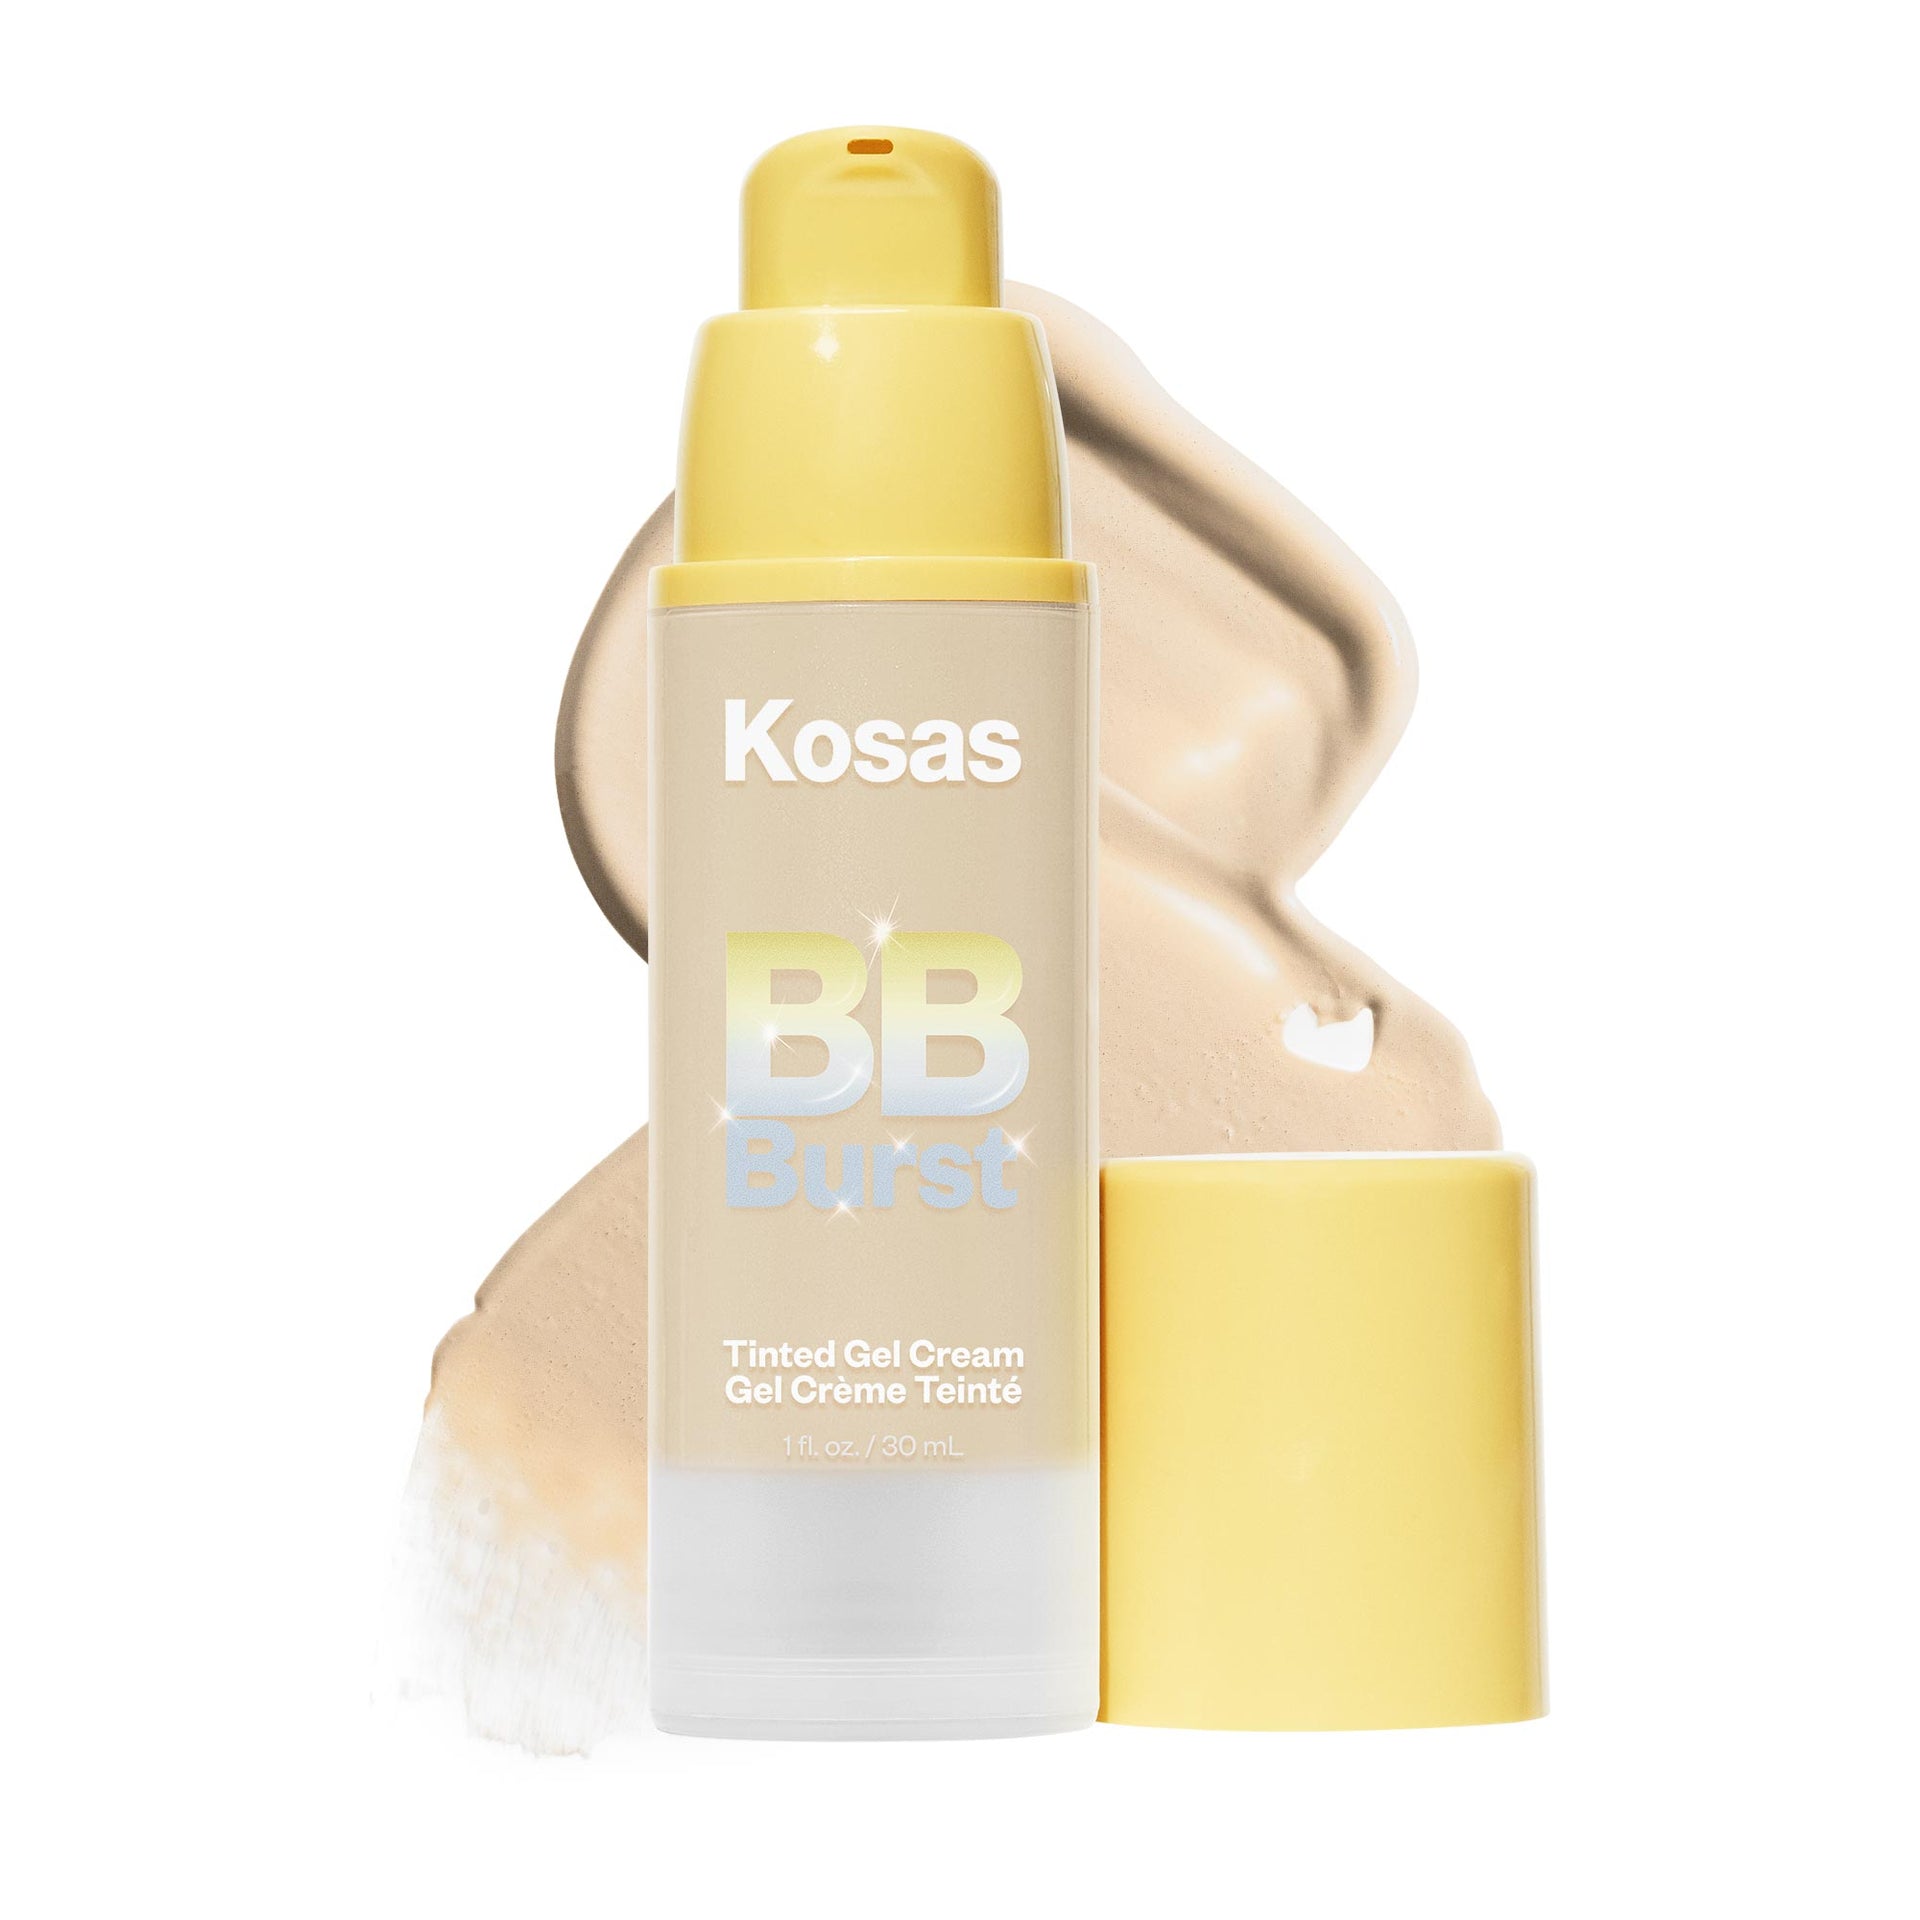 Kosas BB Burst in the shade Light+ Neutral Warm 14